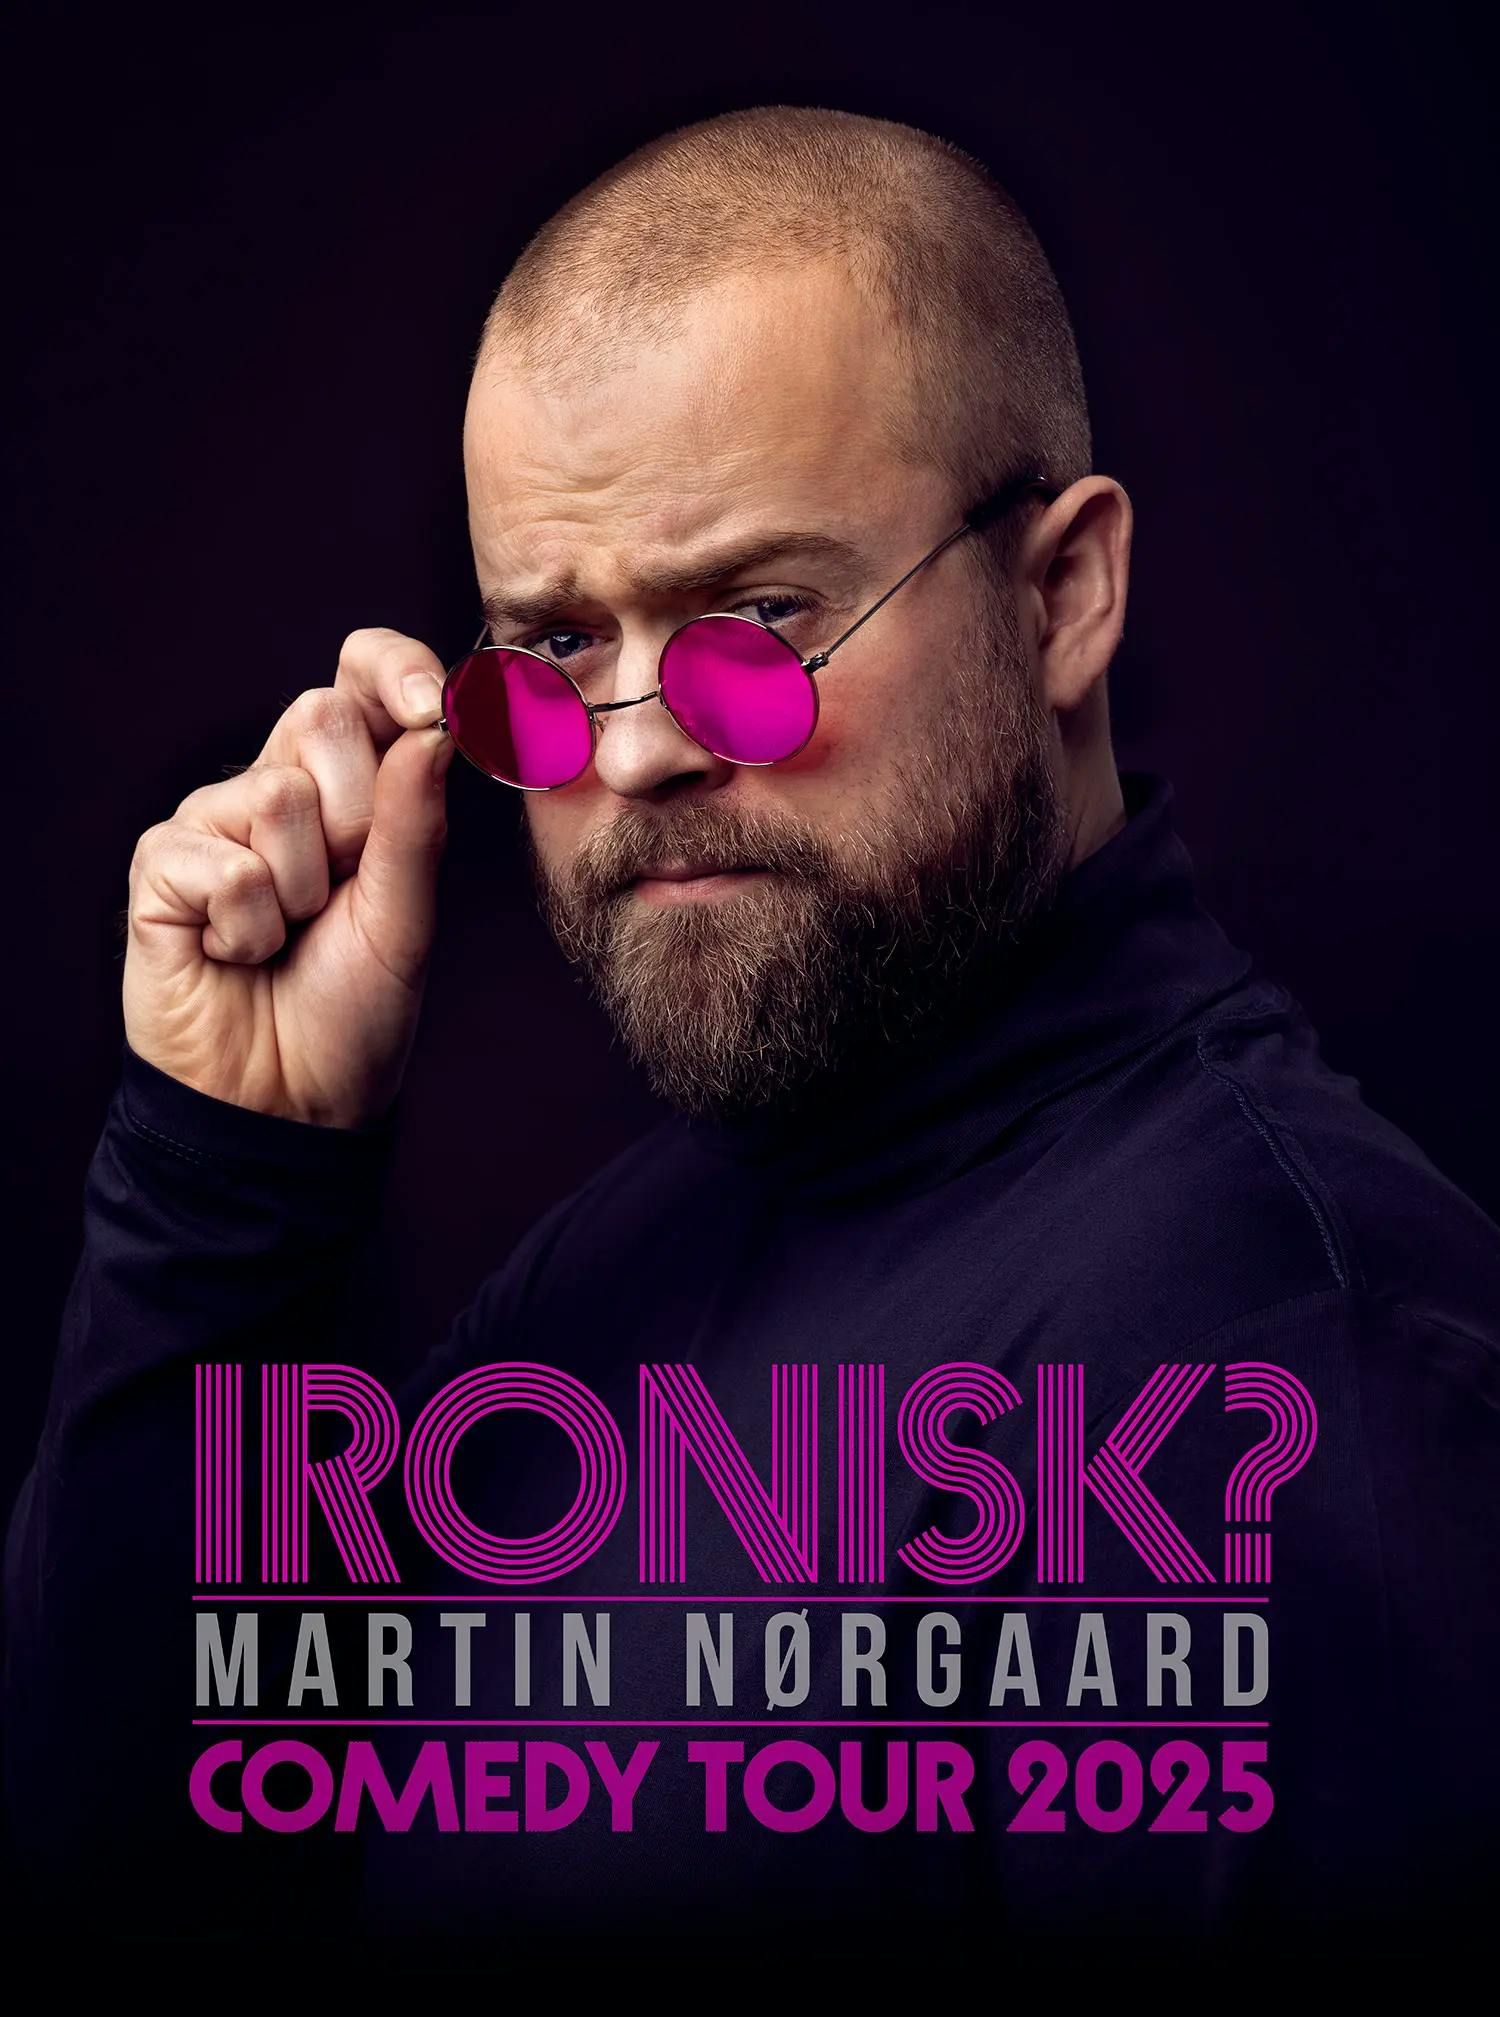 Martin Nørgaard: Ironisk?